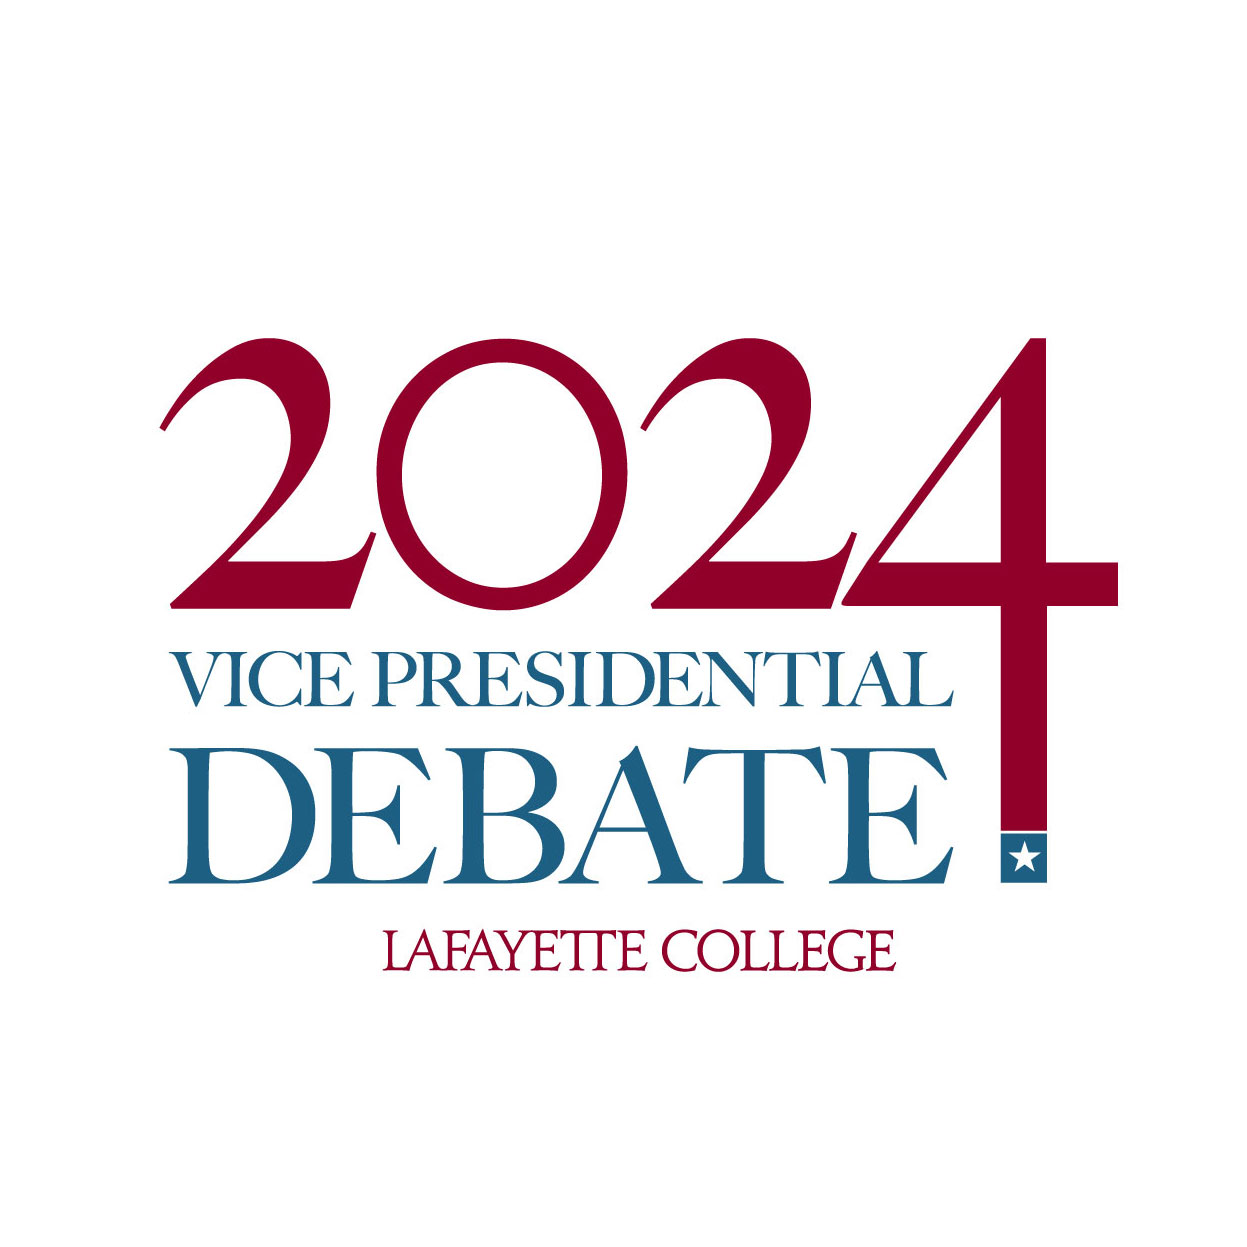 Lafayette lands VP debate